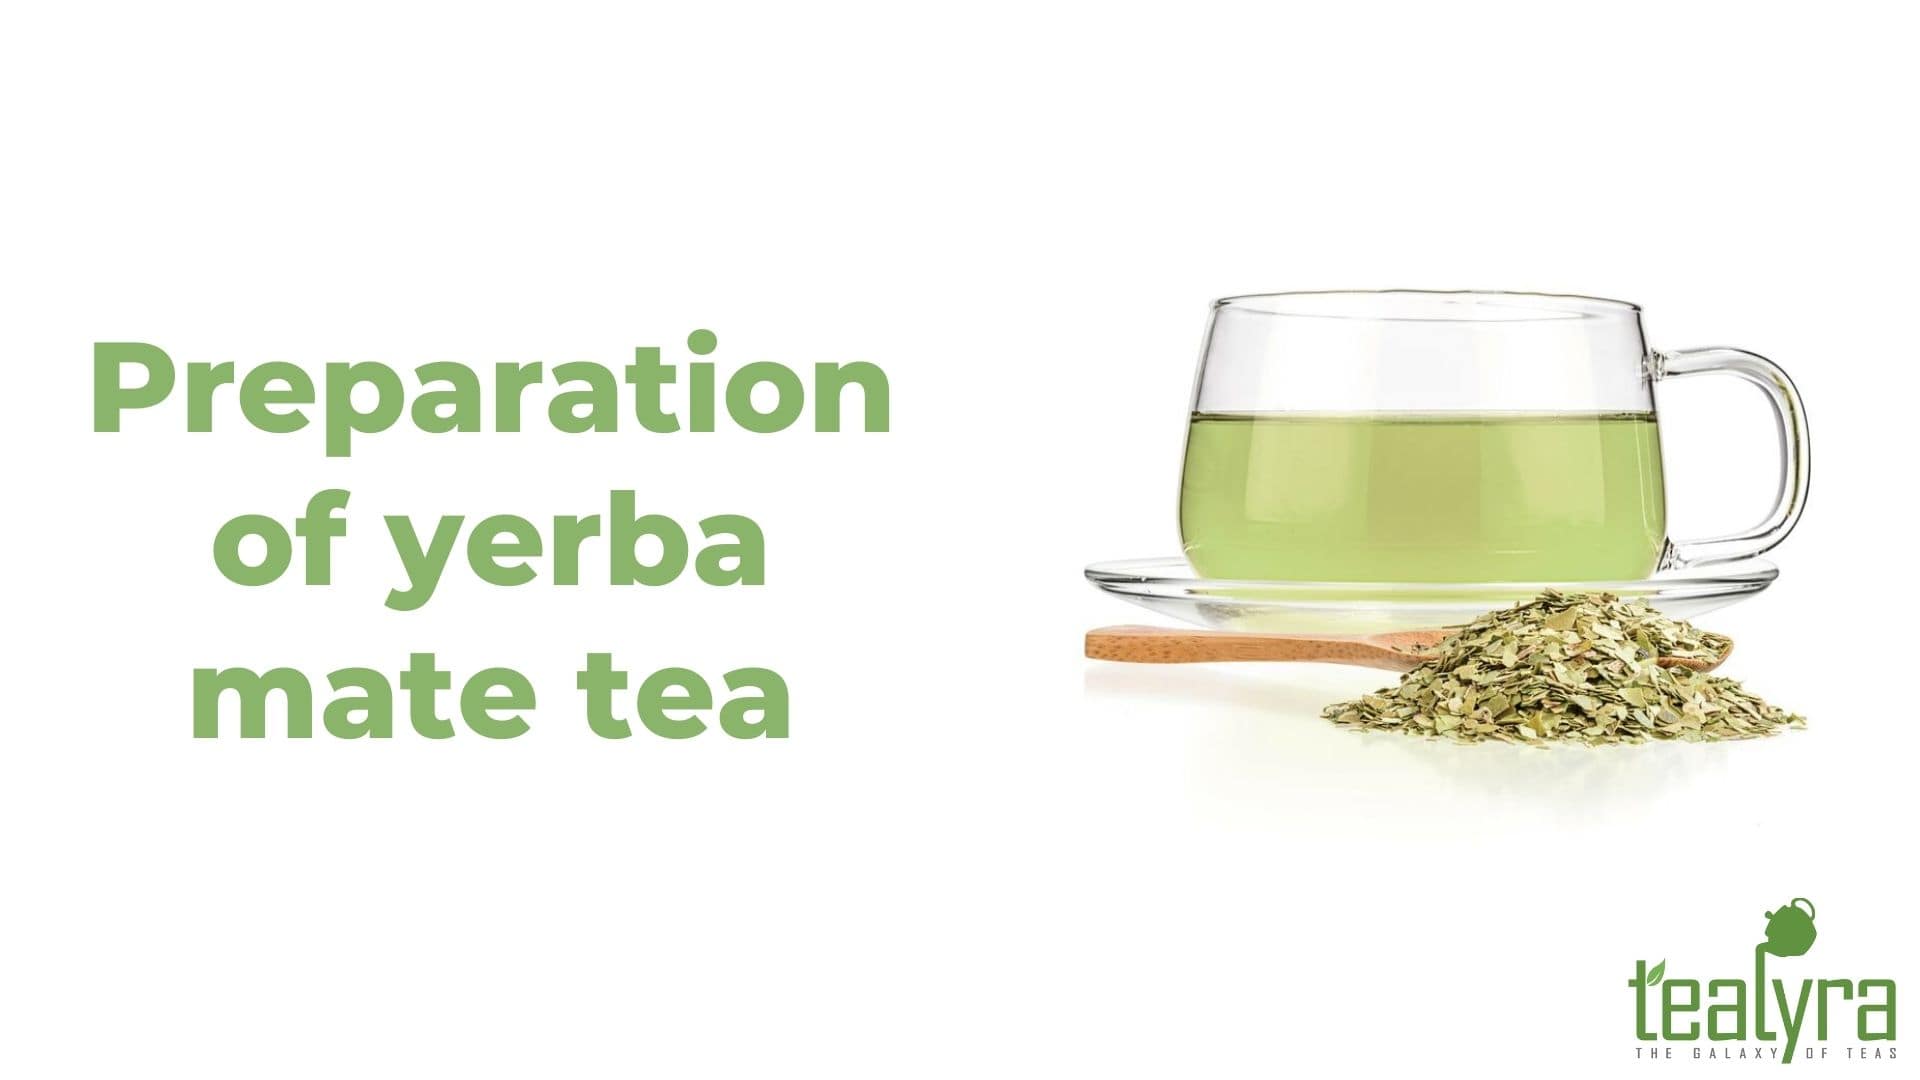 image-preparation-of-yerba-mate-tea